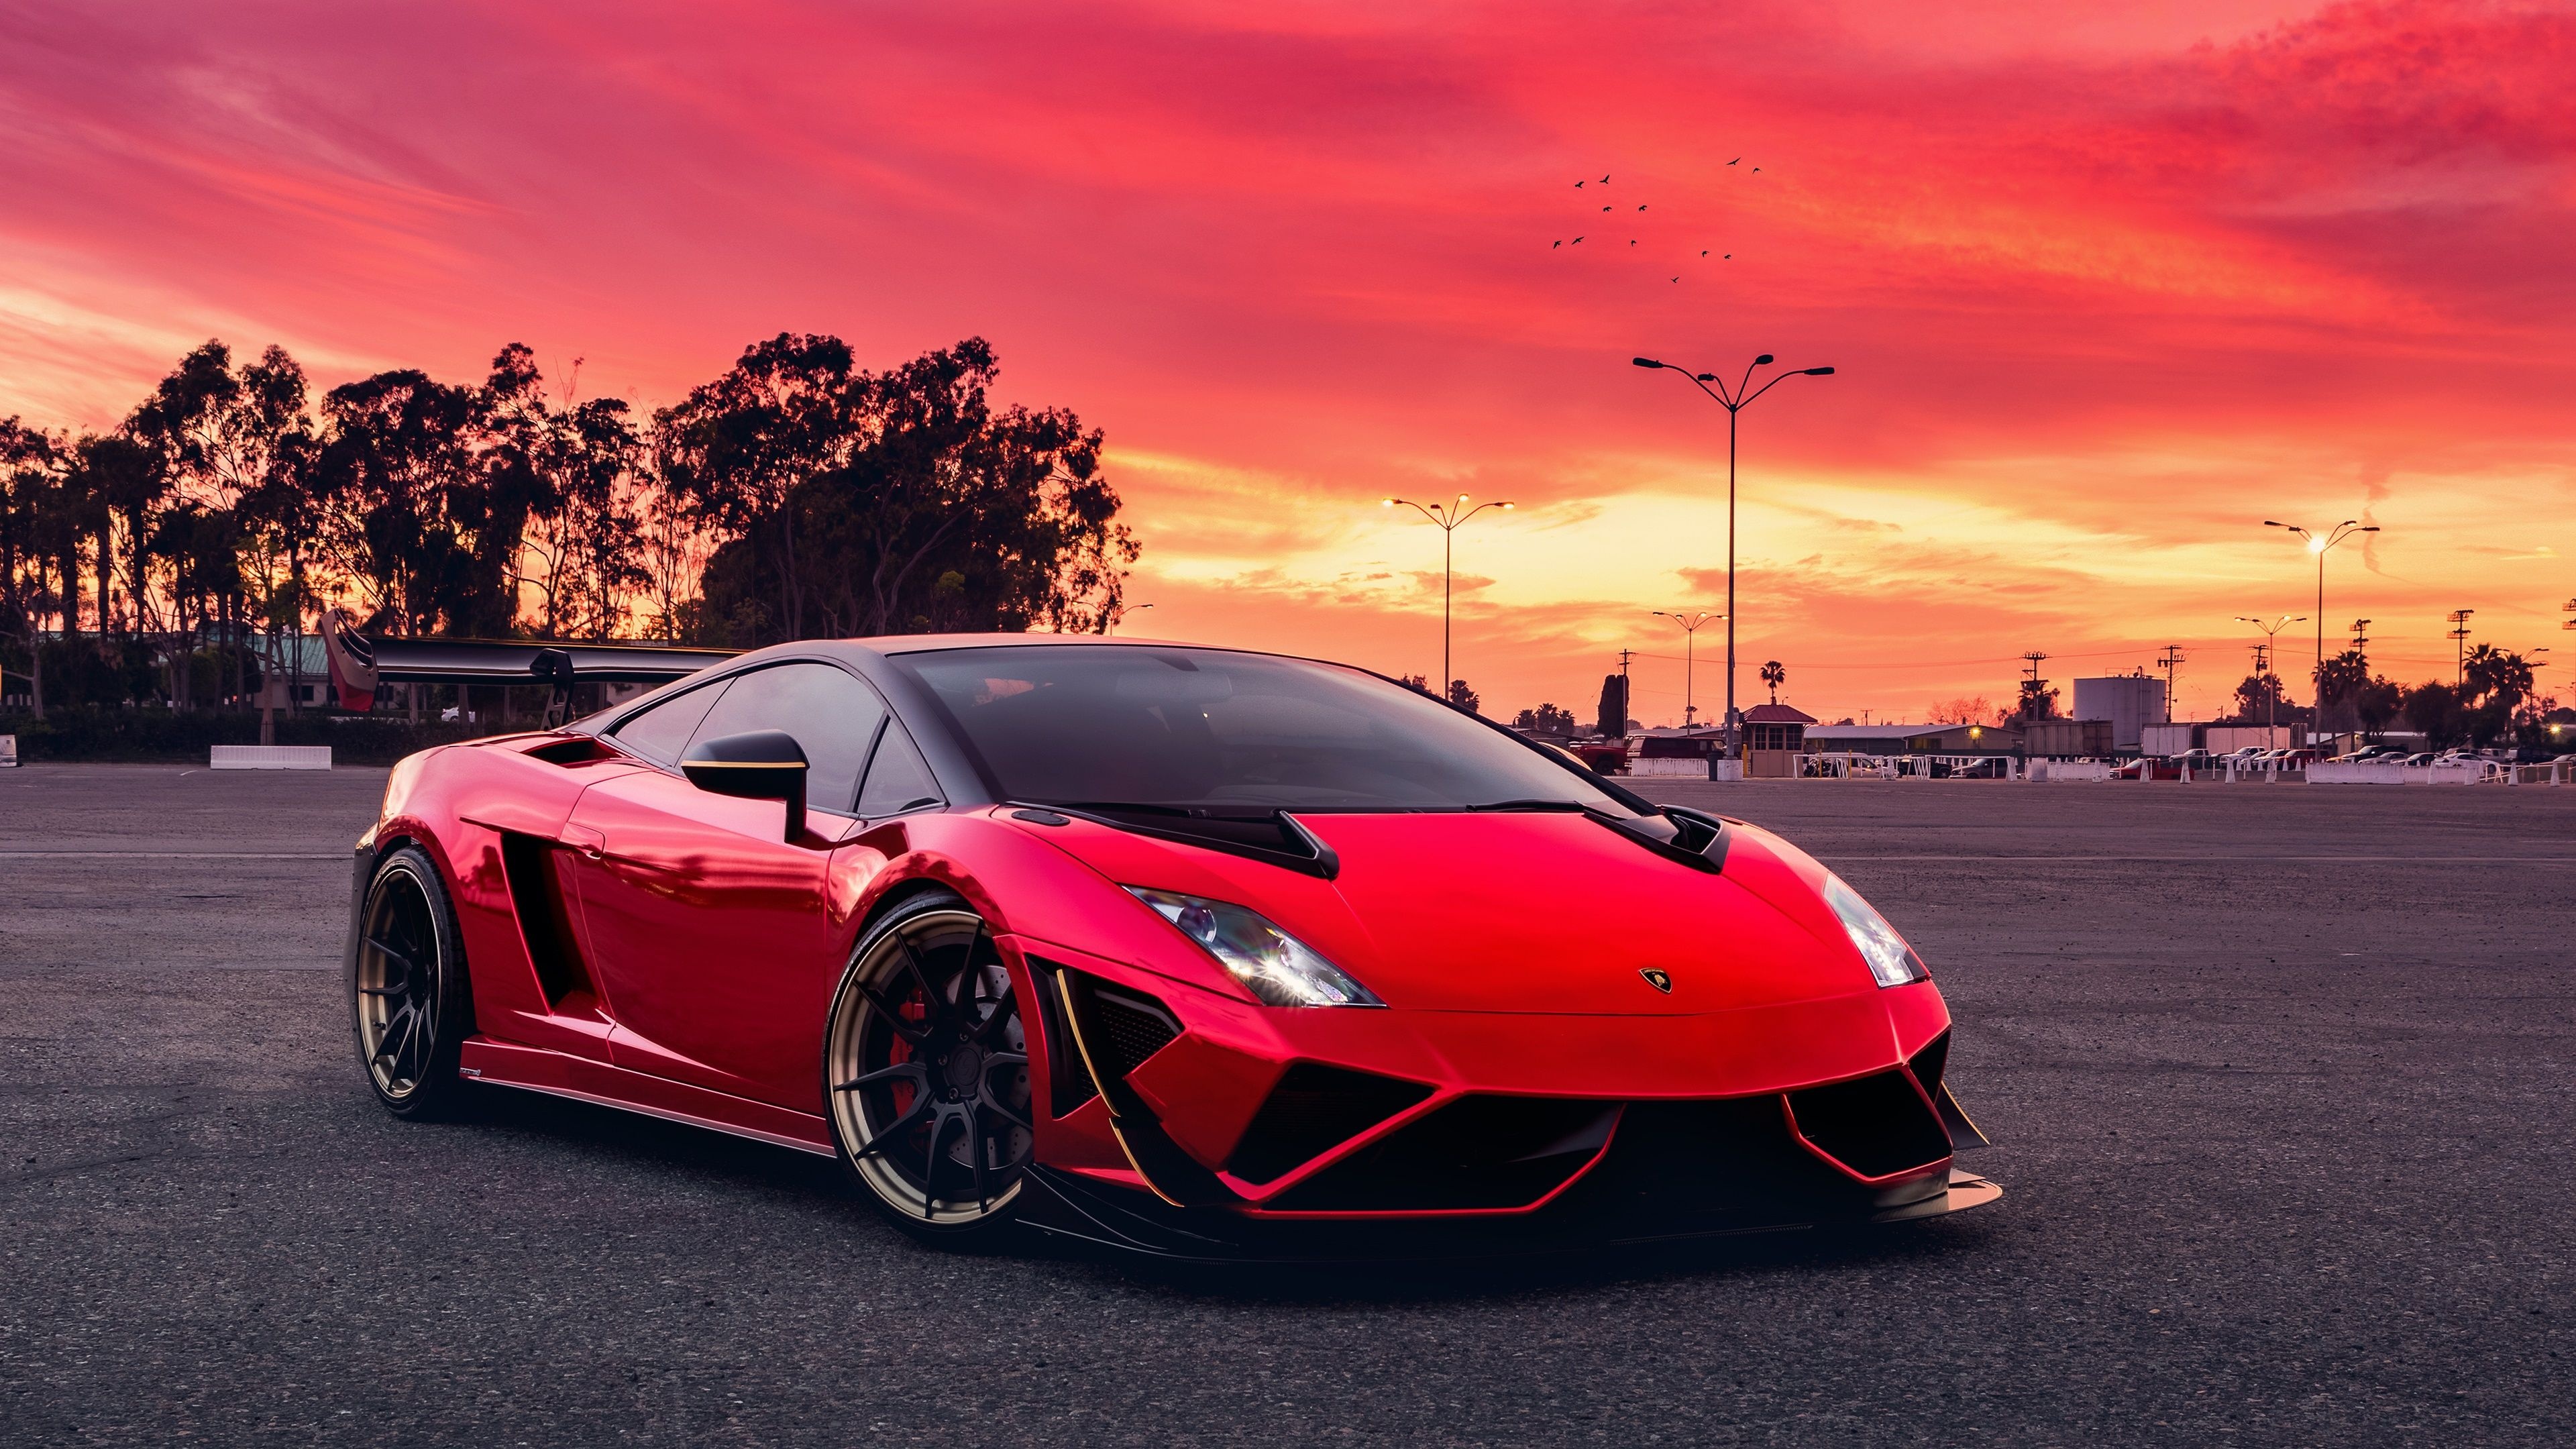 Sunset, Lamborghini Gallardo Wallpaper, 3840x2160 4K Desktop